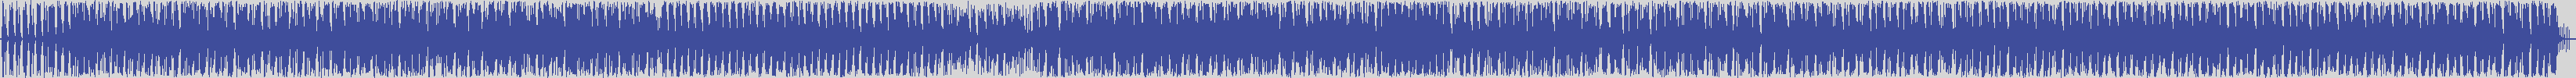 upr [UPR025] Nervenet - Mr X [Original Mix] audio wave form